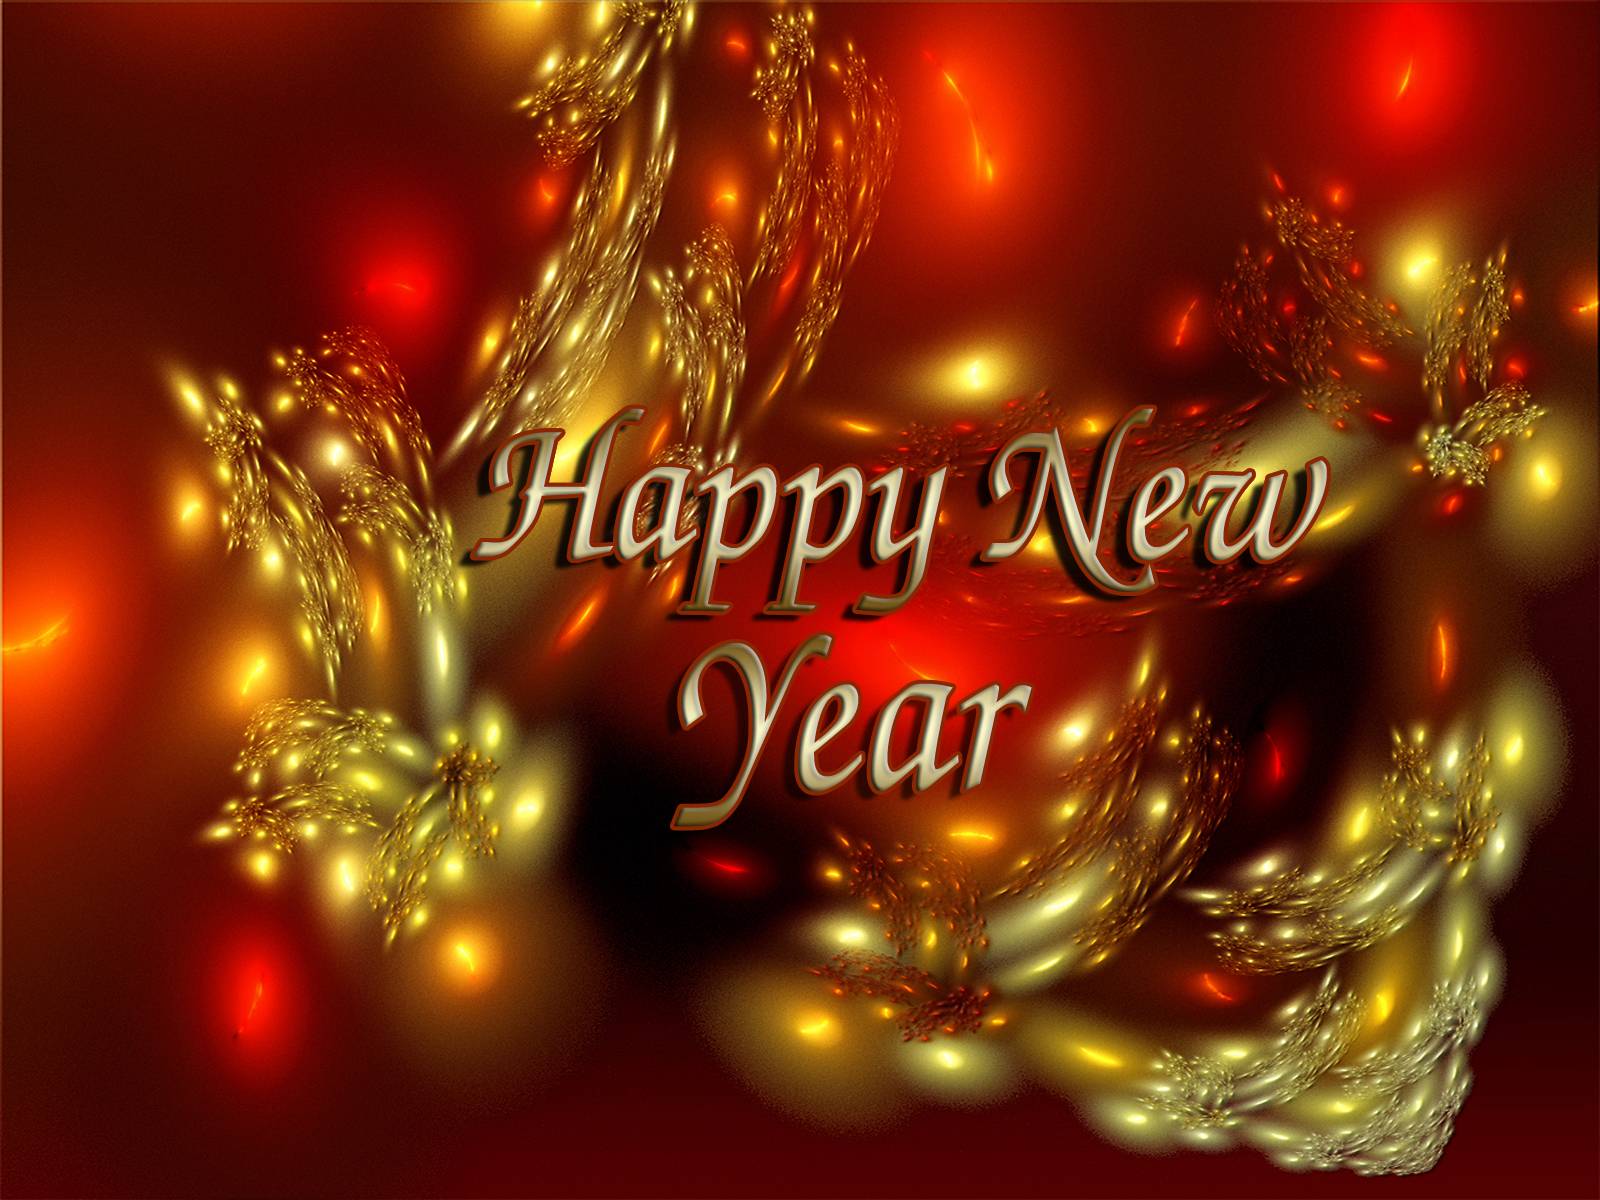 Happy New Year Greetings Love Image Wallpaper. walldesktophd